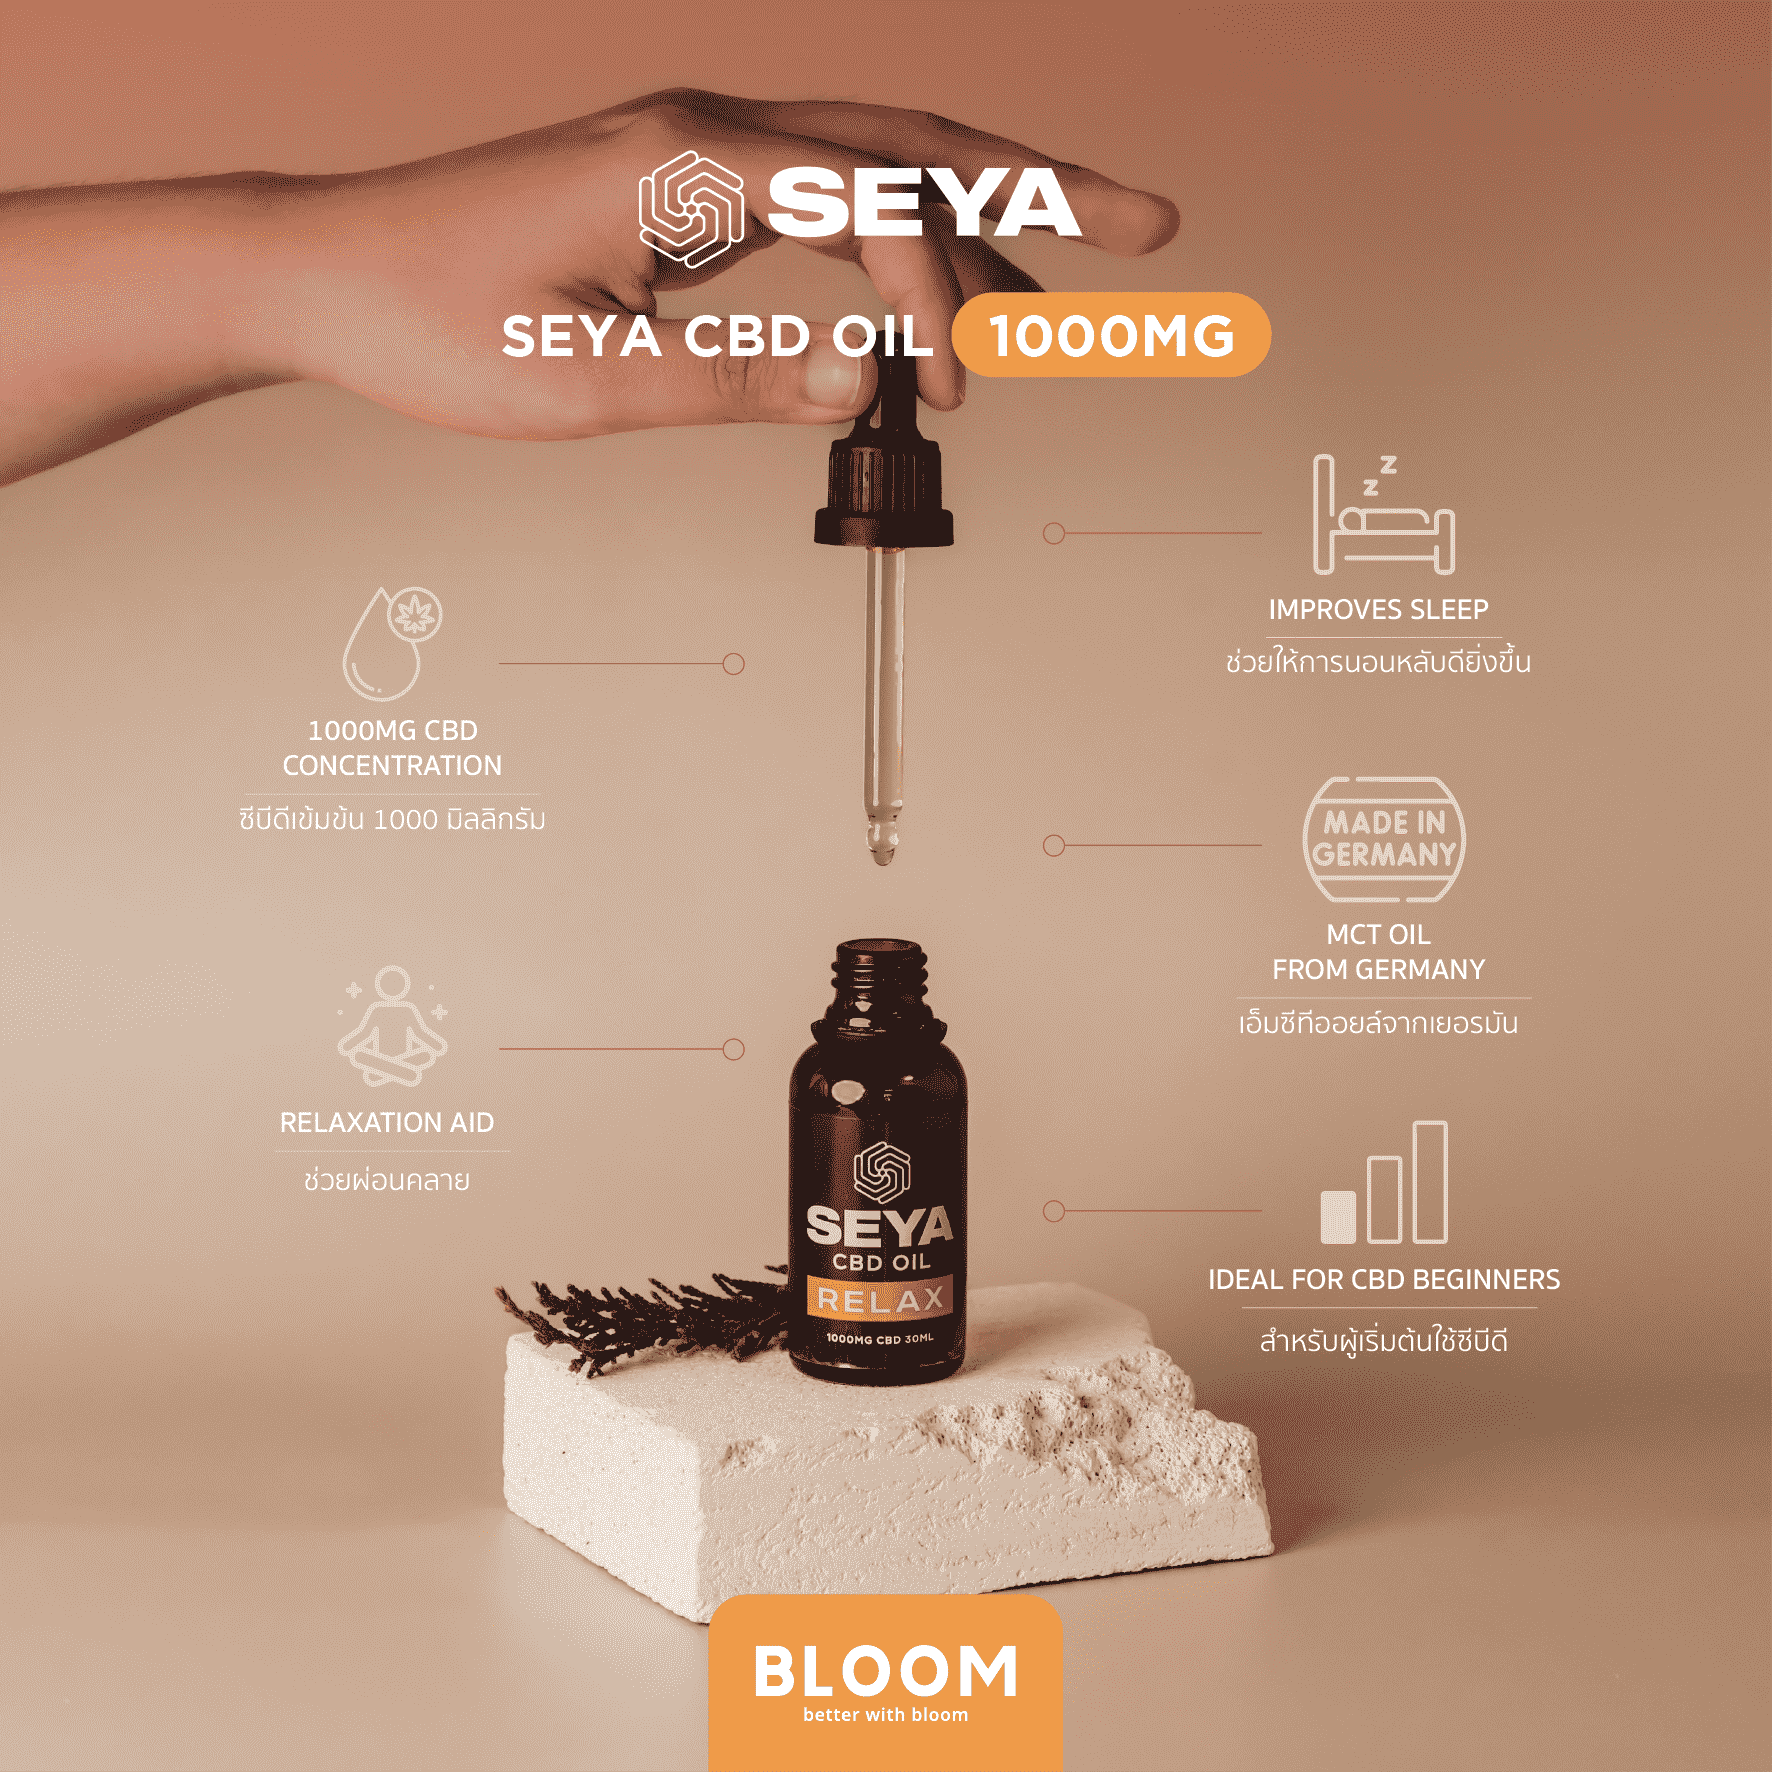 seya cbd oil benefits